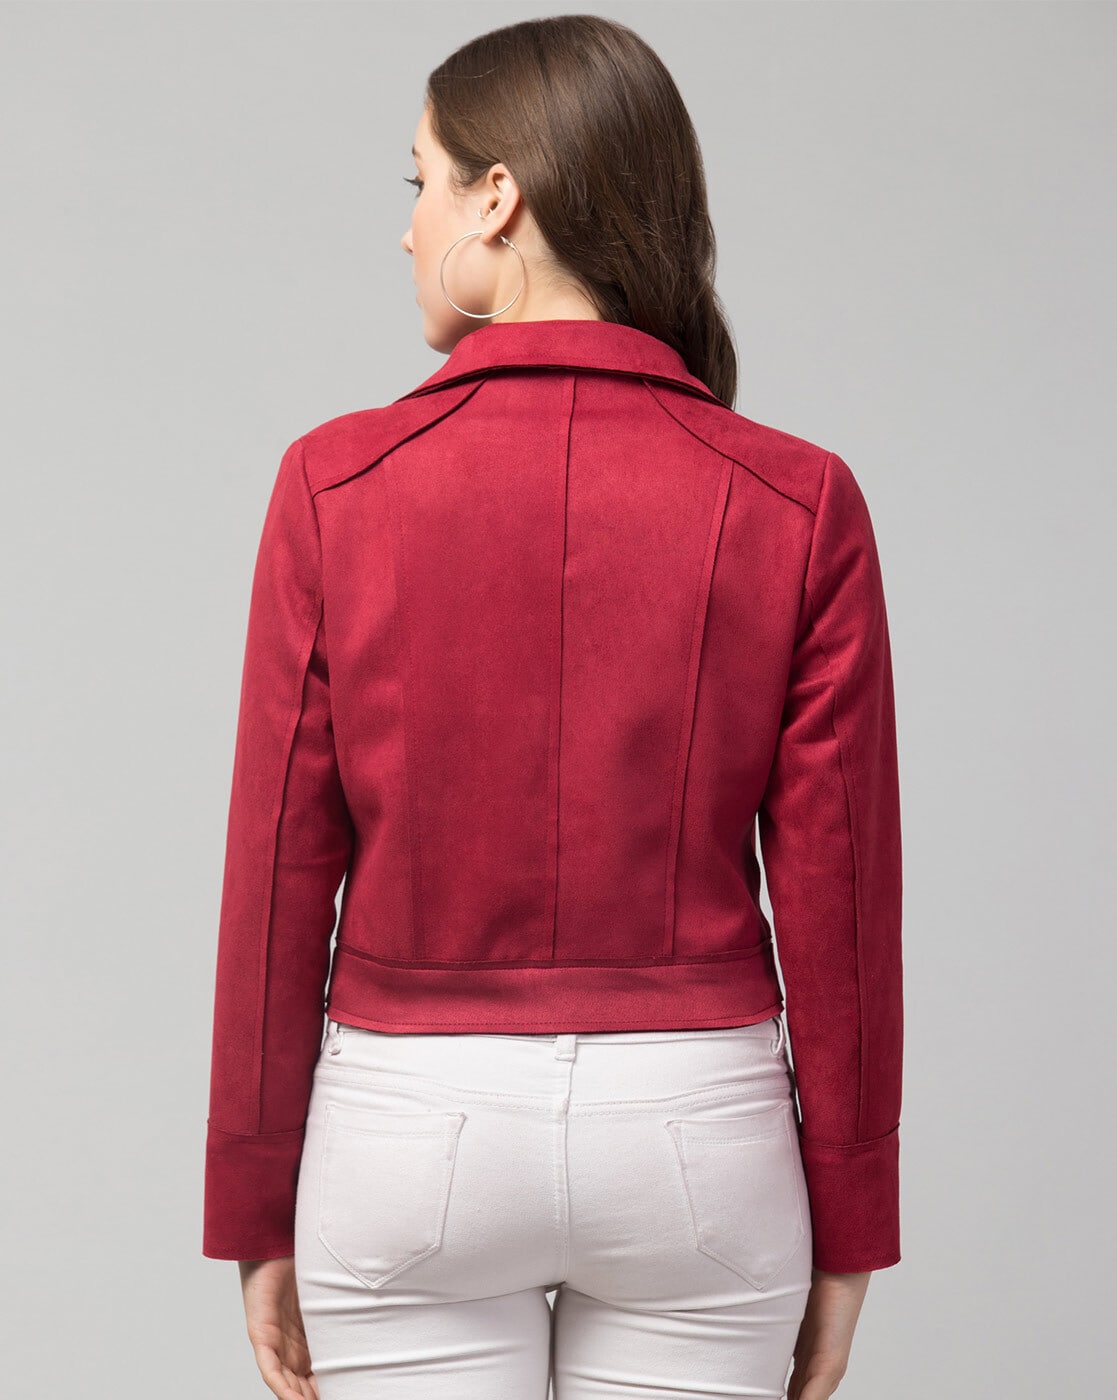 Jackets & Overcoats | Red Leather Jacket | Winterwear | Freeup